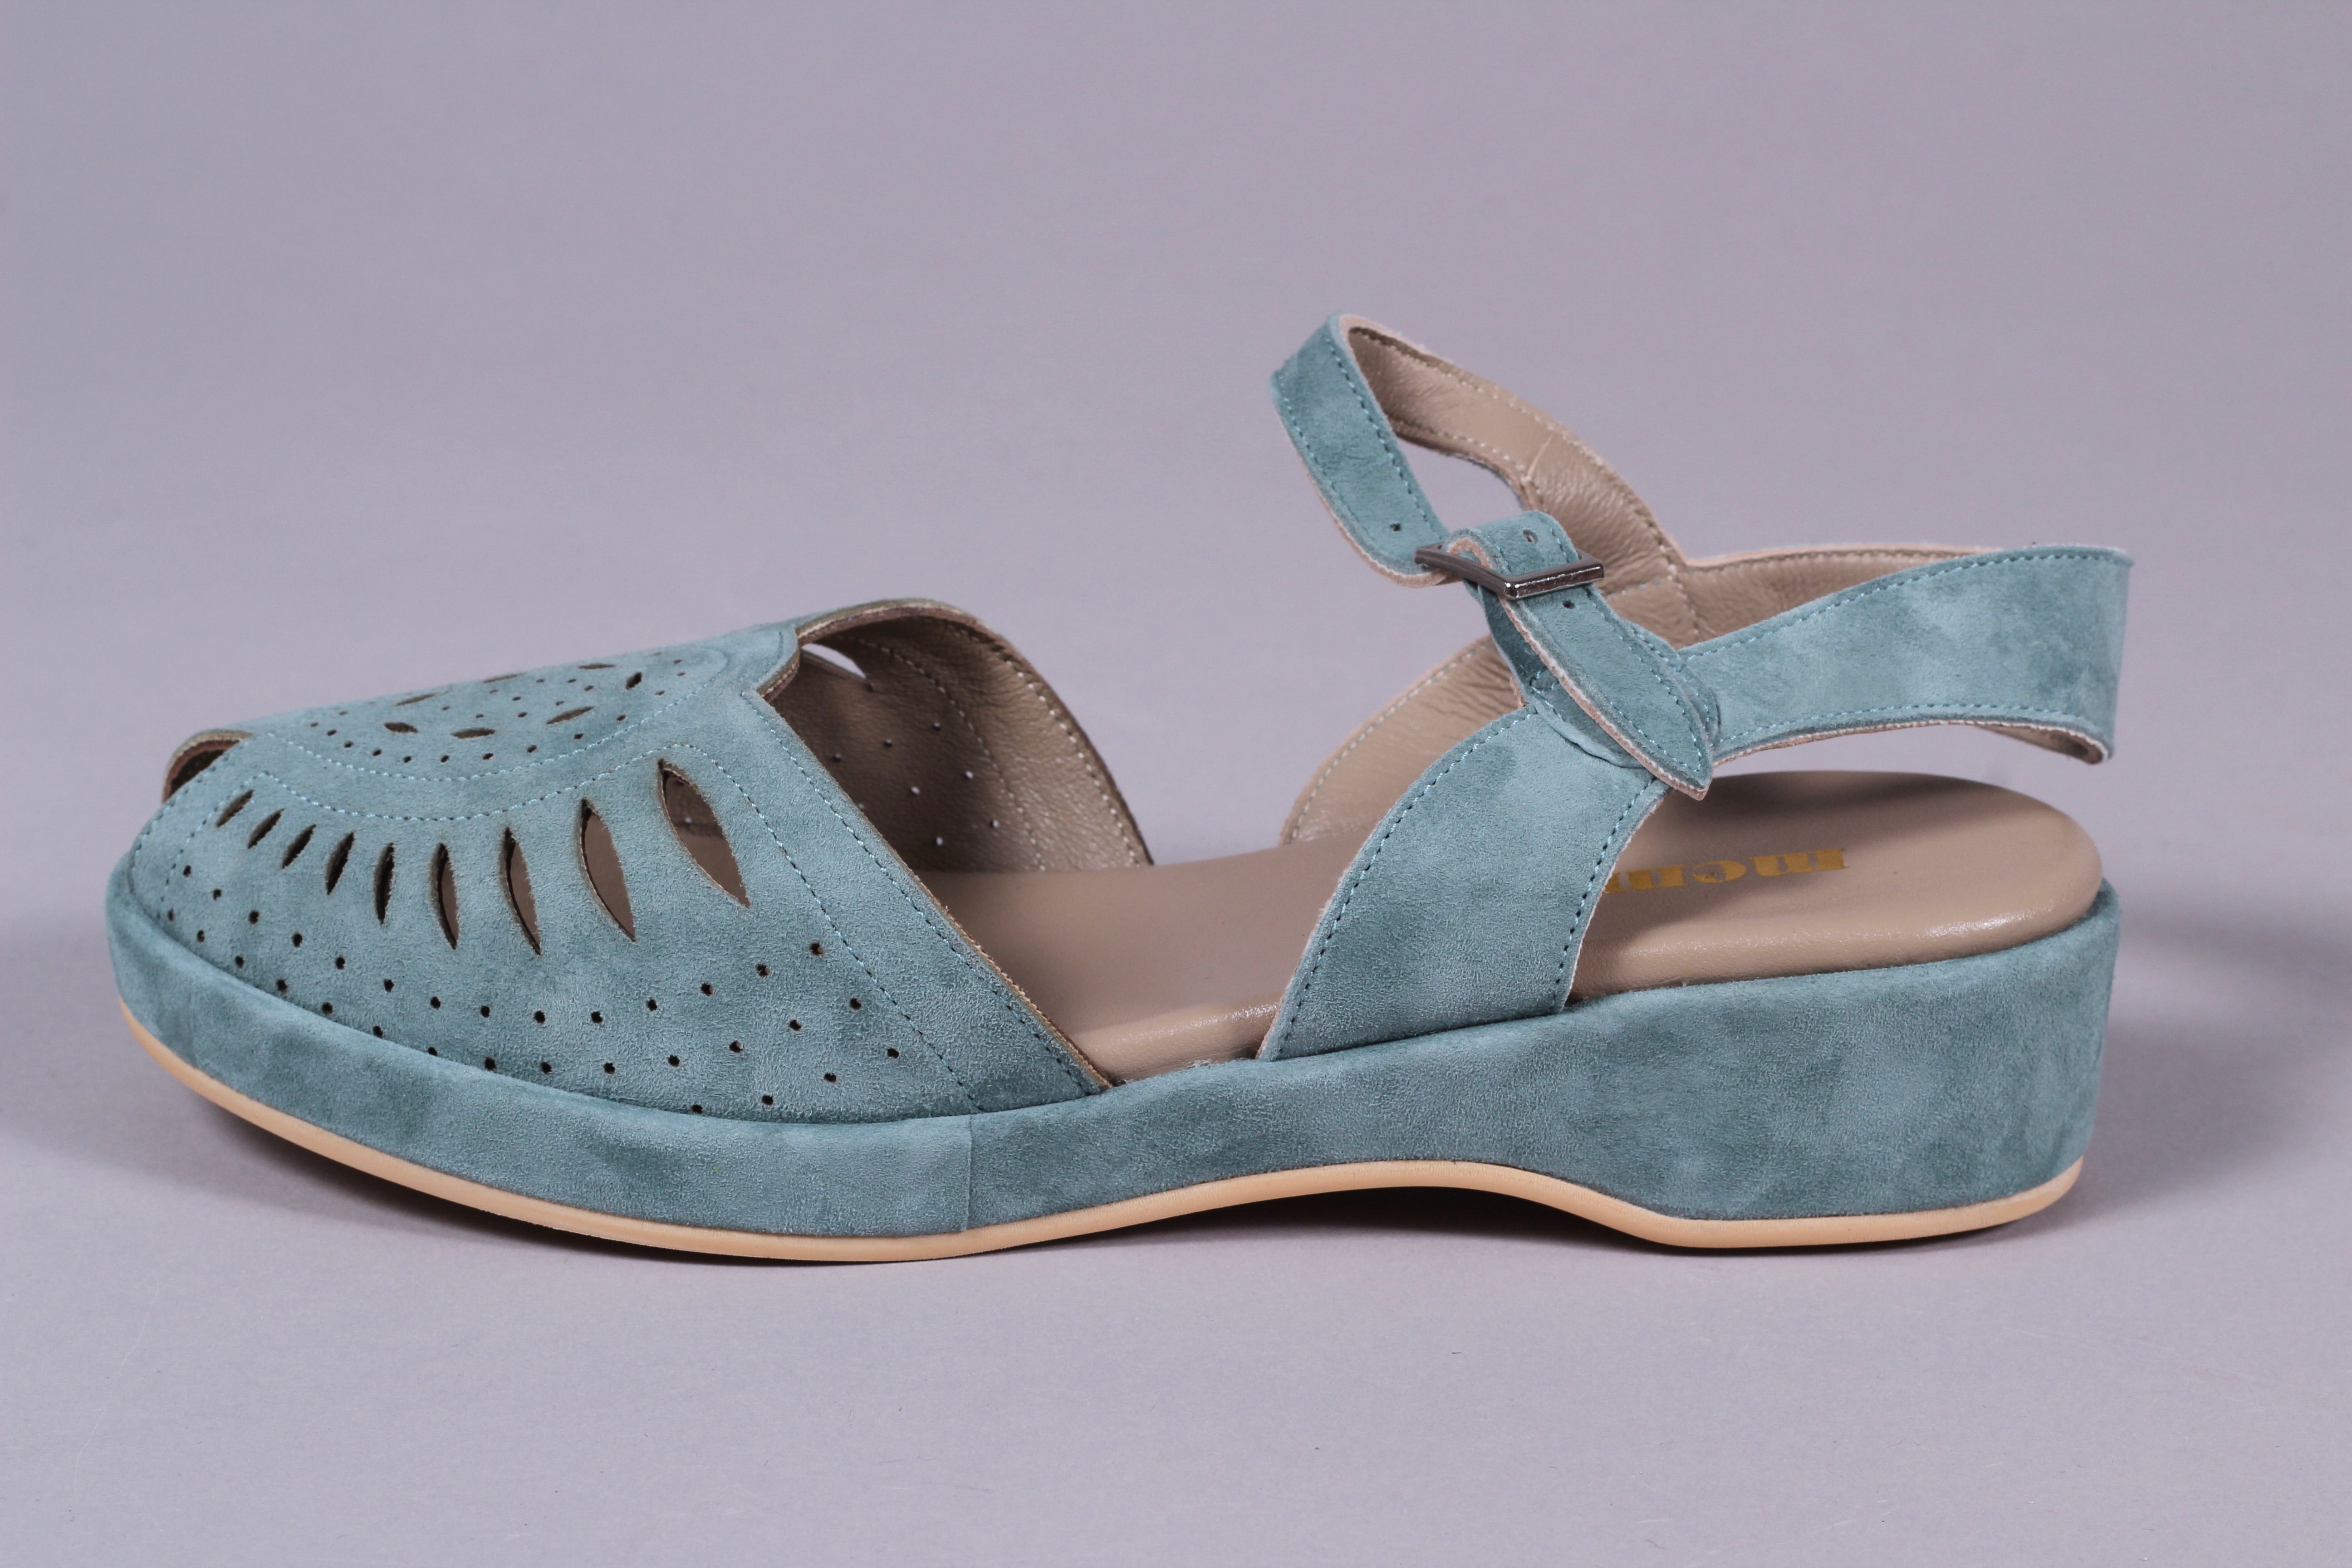 1940s / 50s style suede wedge - Dusty blue green - Ella